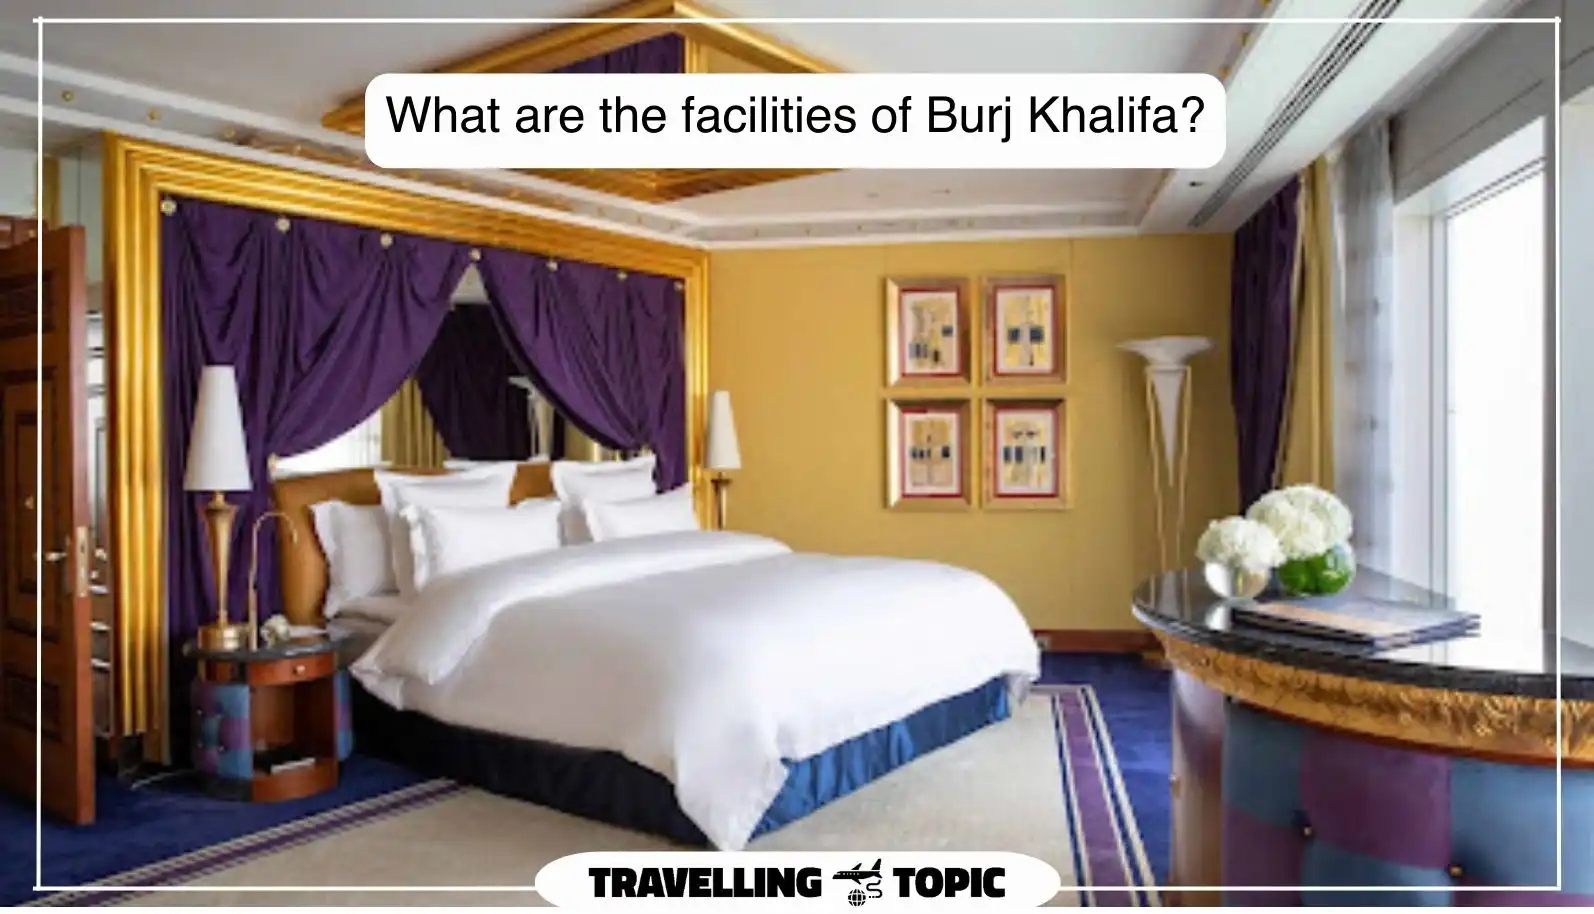 What are the facilities of Burj Khalifa